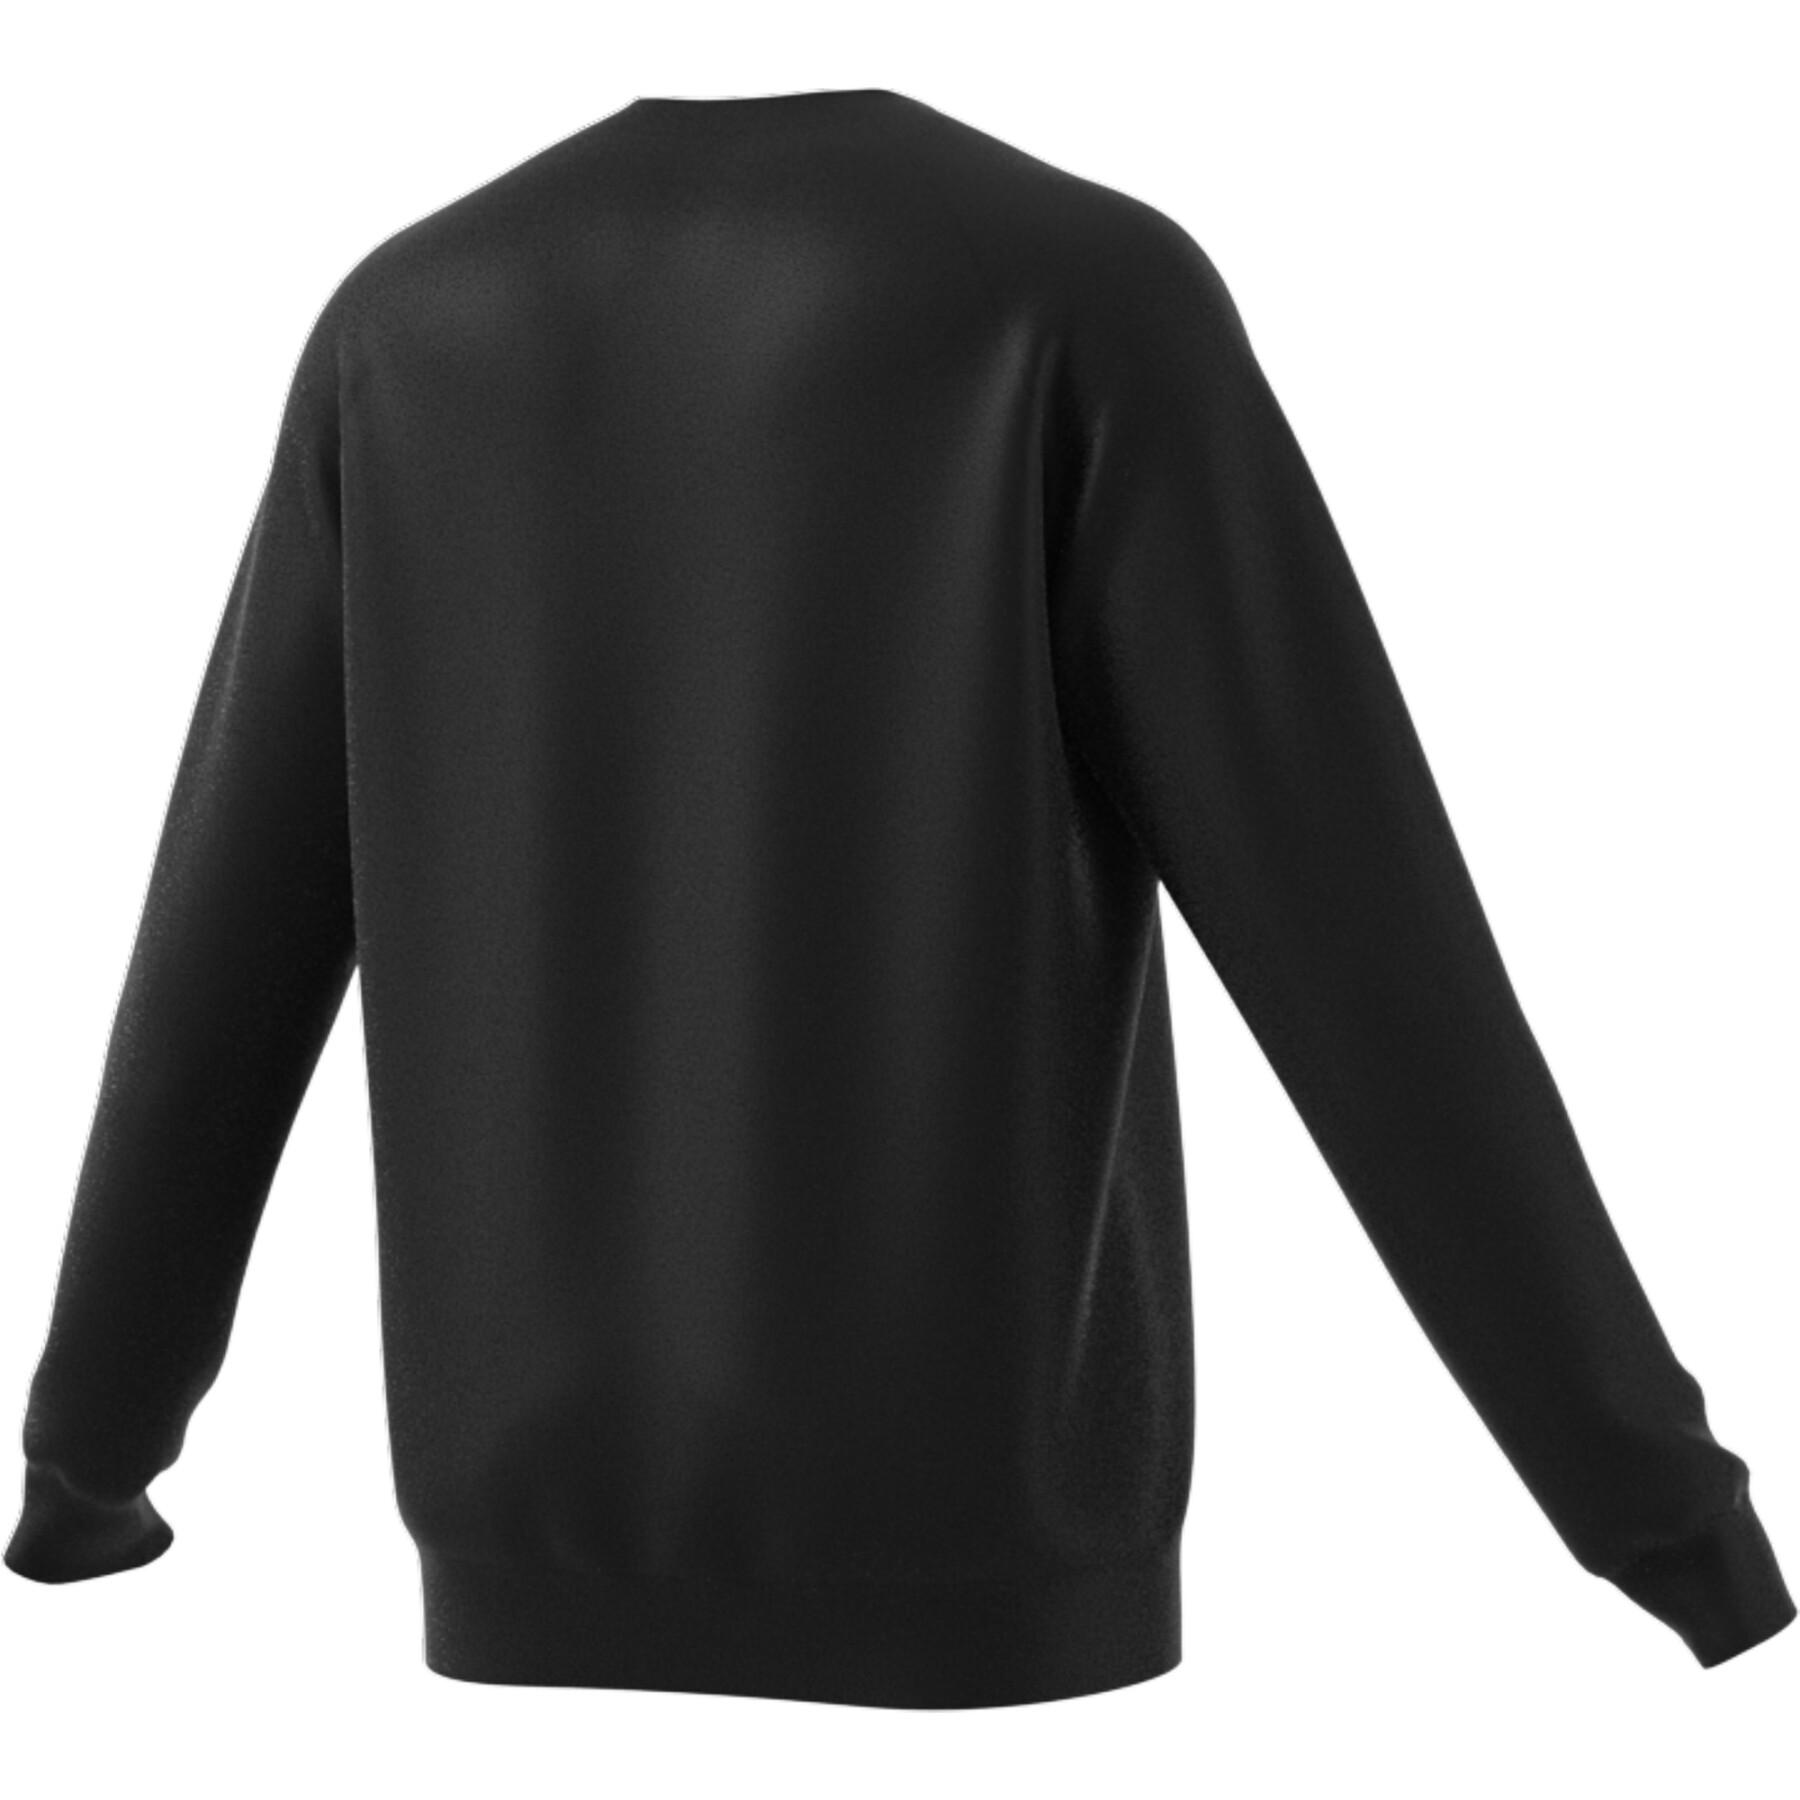 Sweatshirt col rond adidas Originals Adicolor Trefoil